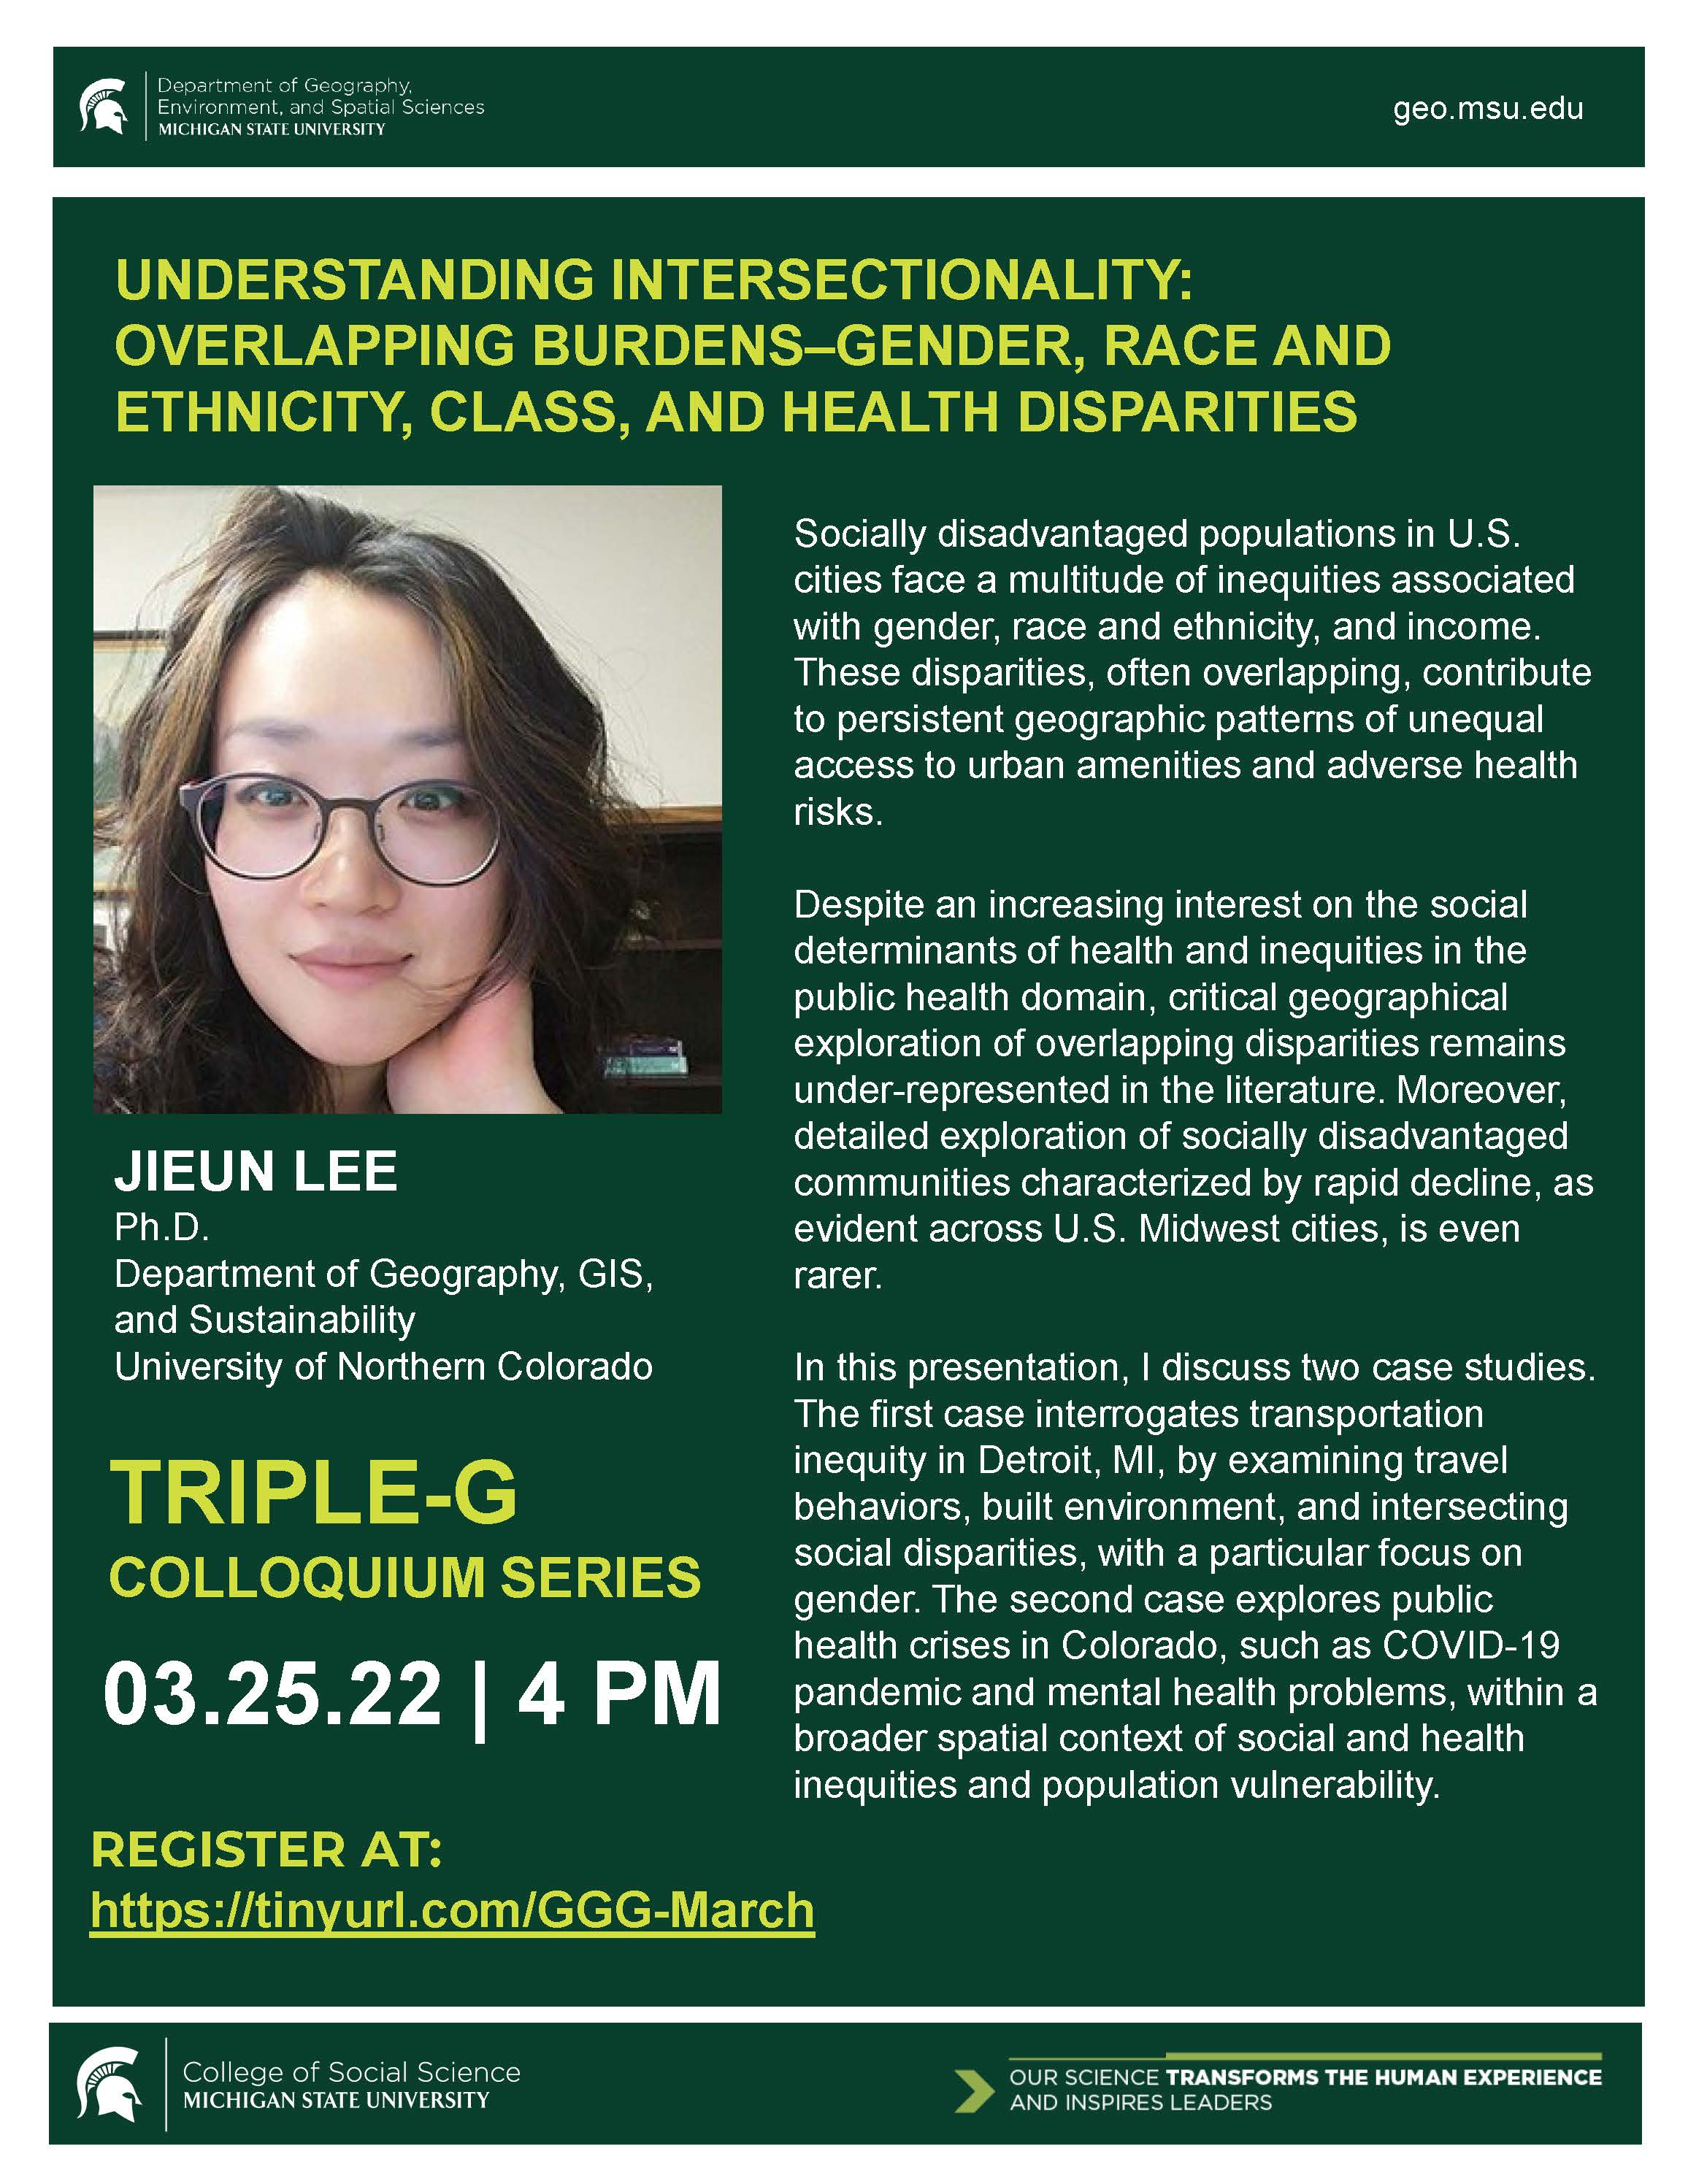 Flyer for Triple G Colloquium featuring Dr. Jieun Lee